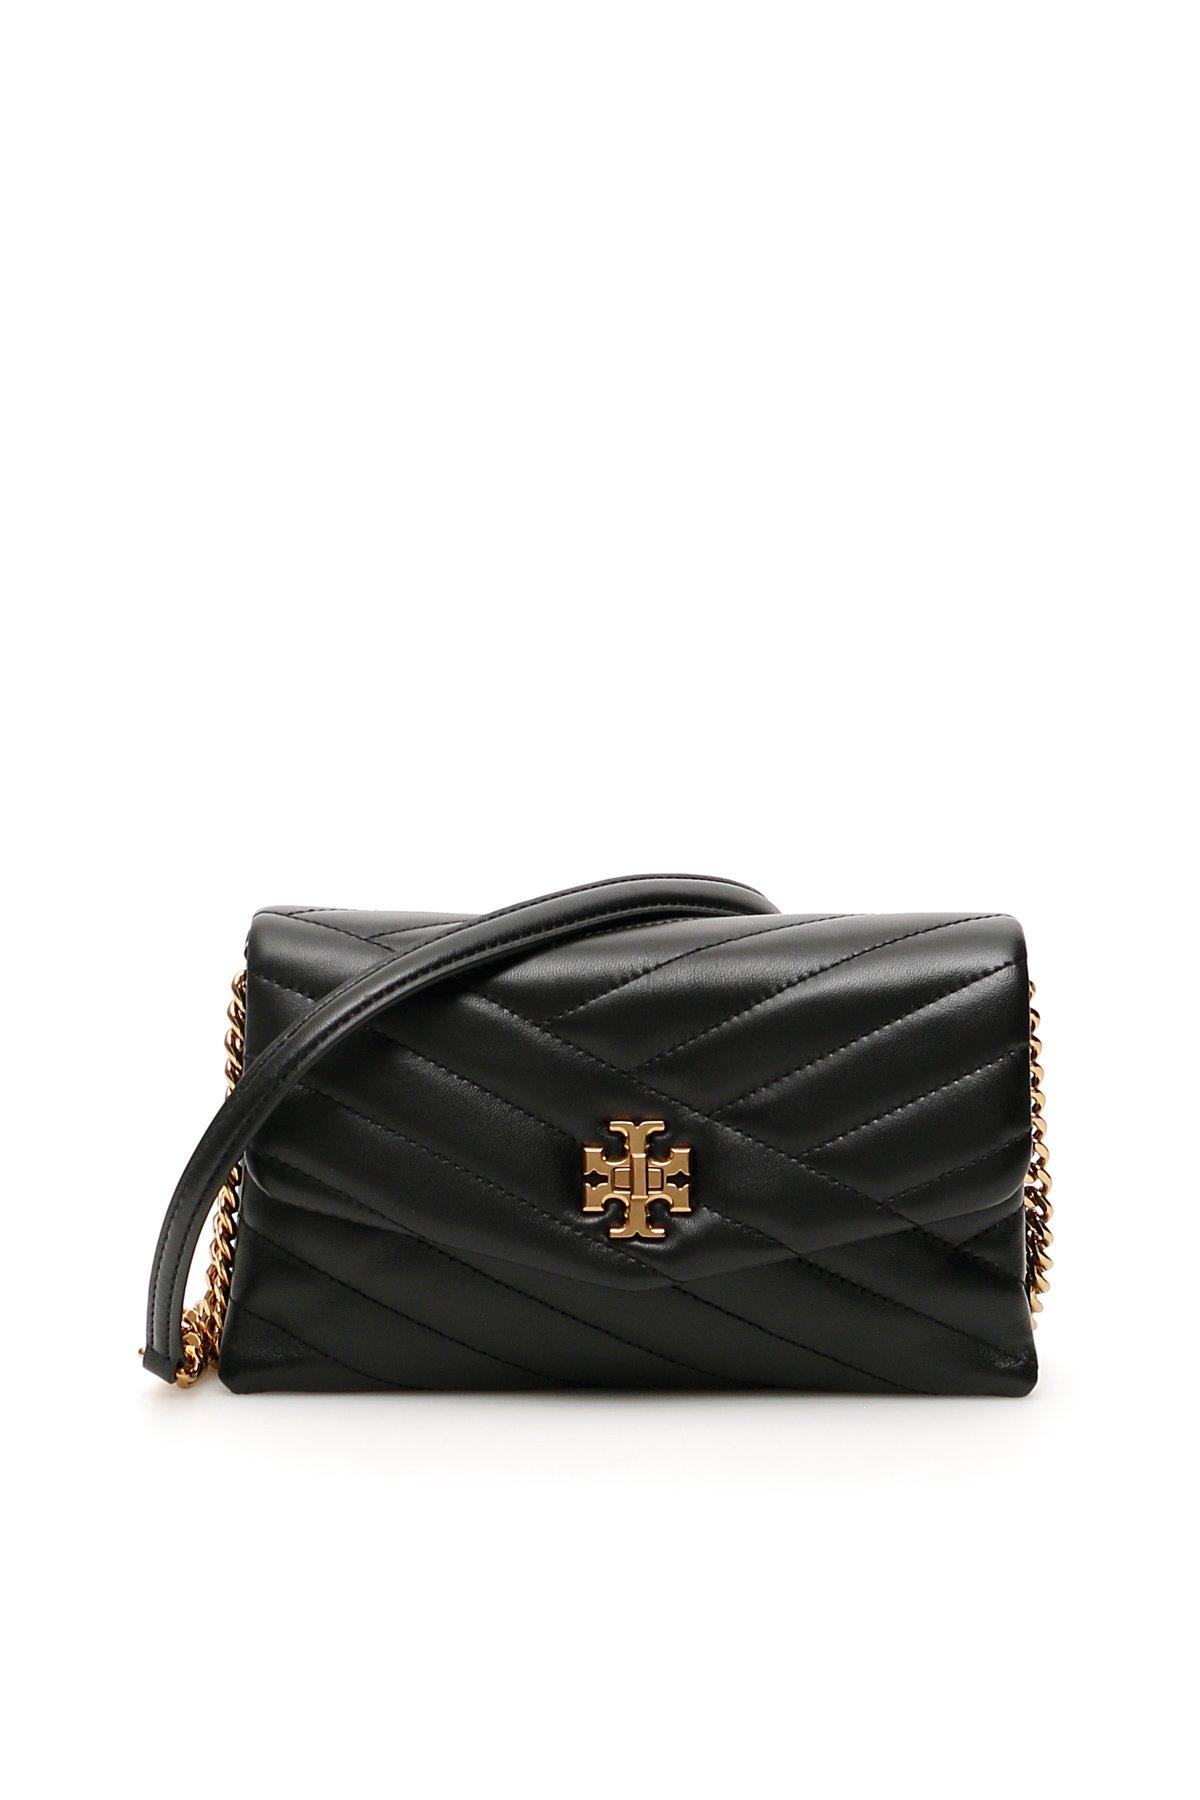 Tory Burch Leather Kira Crossbody Bag in Black - Save 14% - Lyst